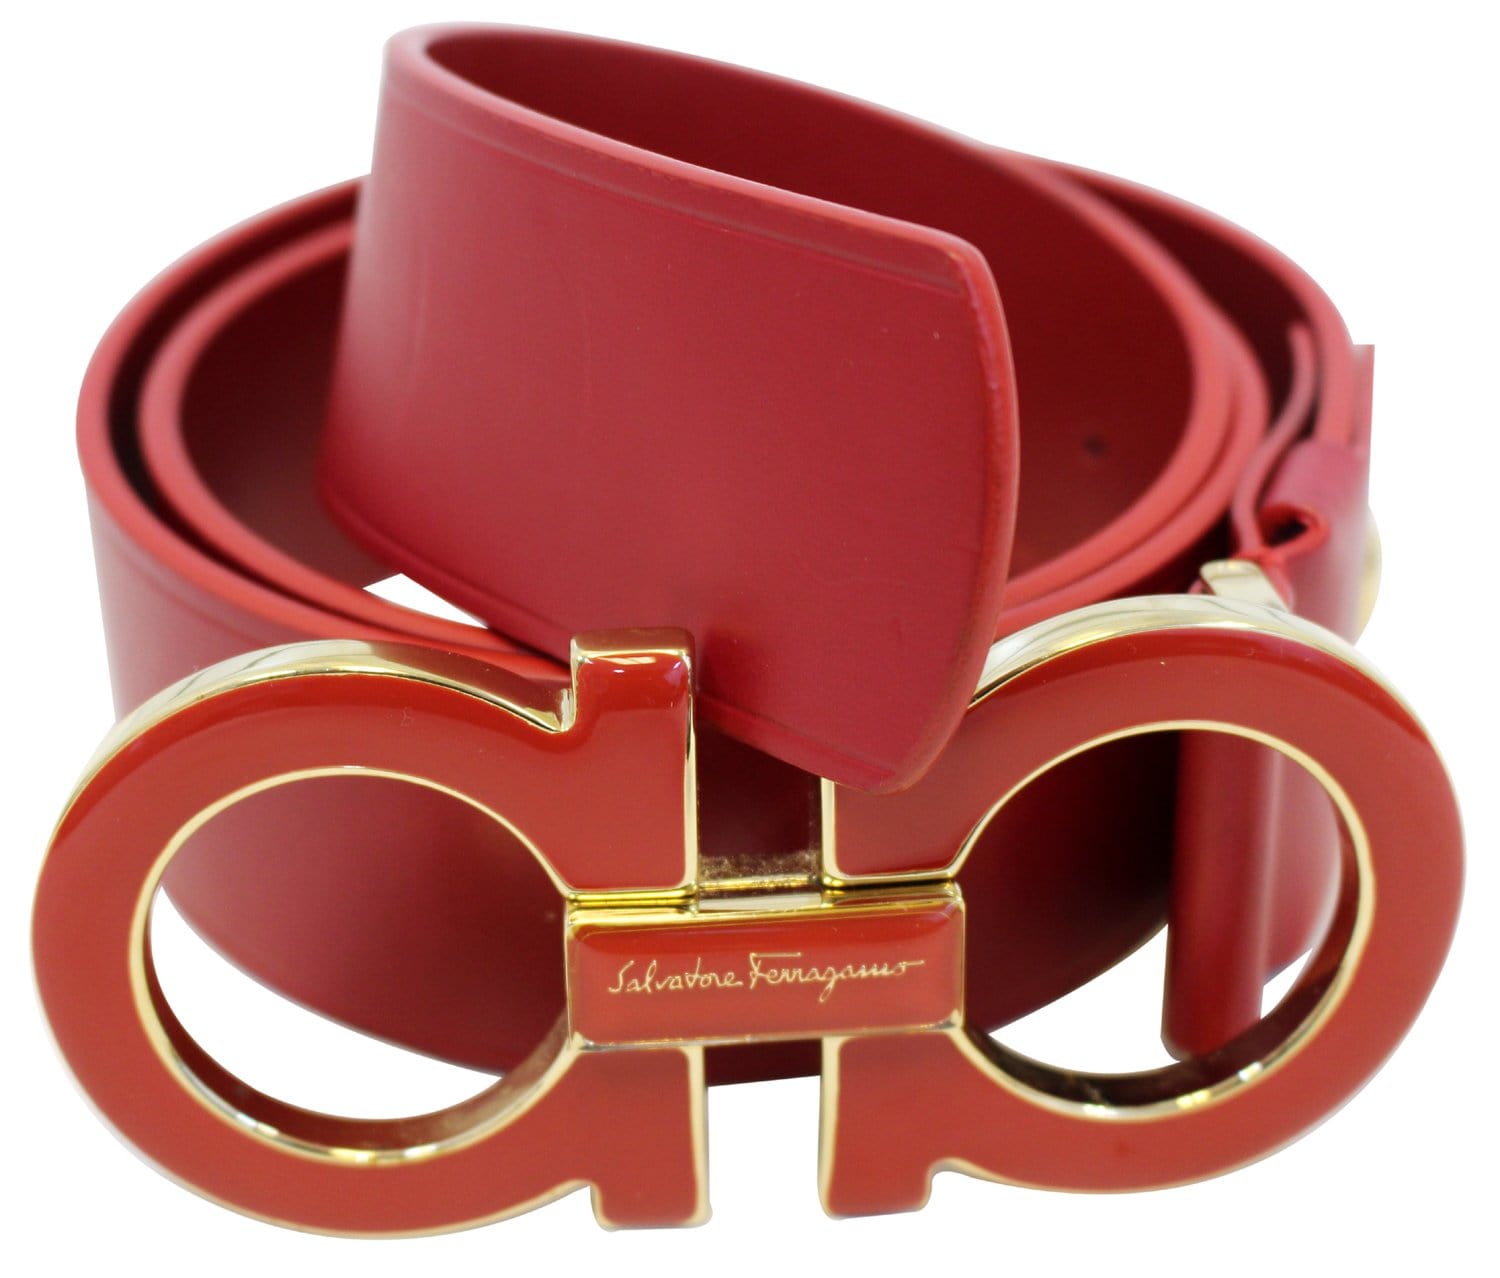 Salvatore Ferragamo Men's Belts for sale